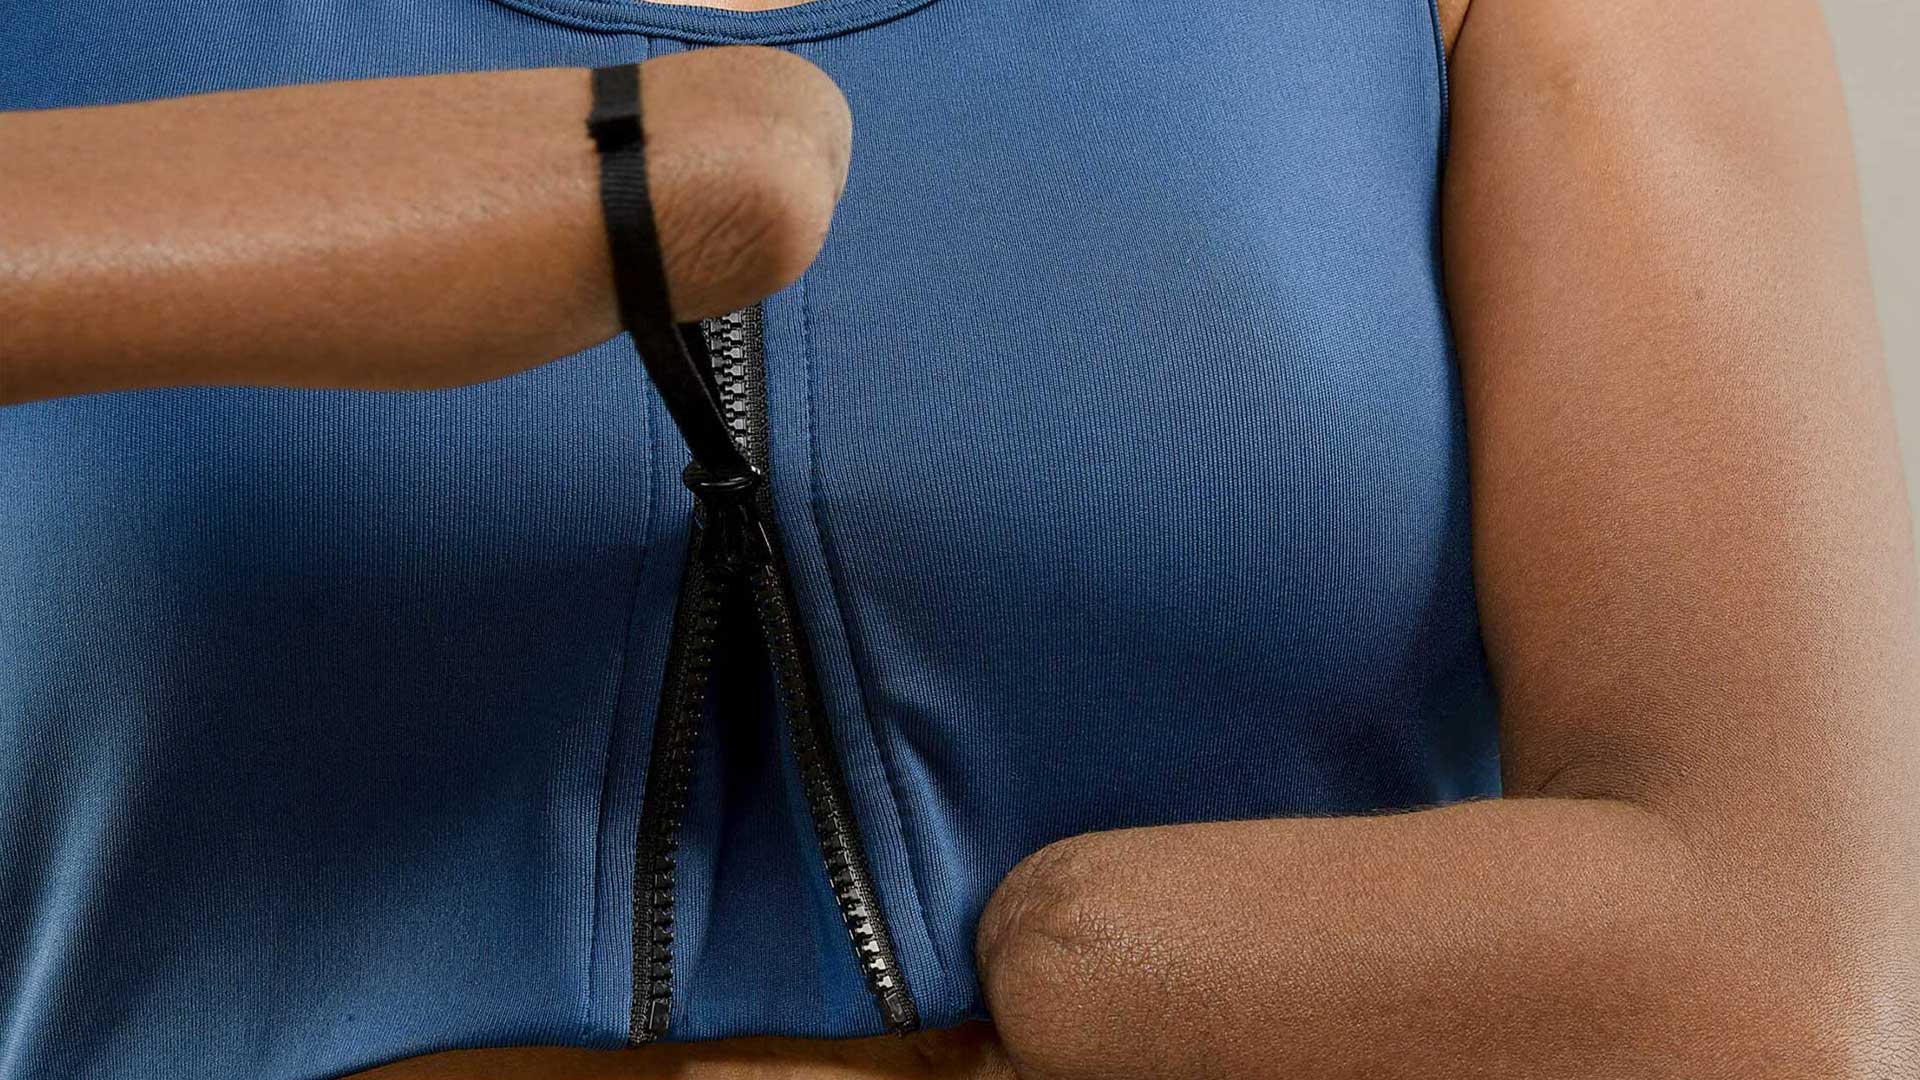 Adaptive sports bra manufacturer